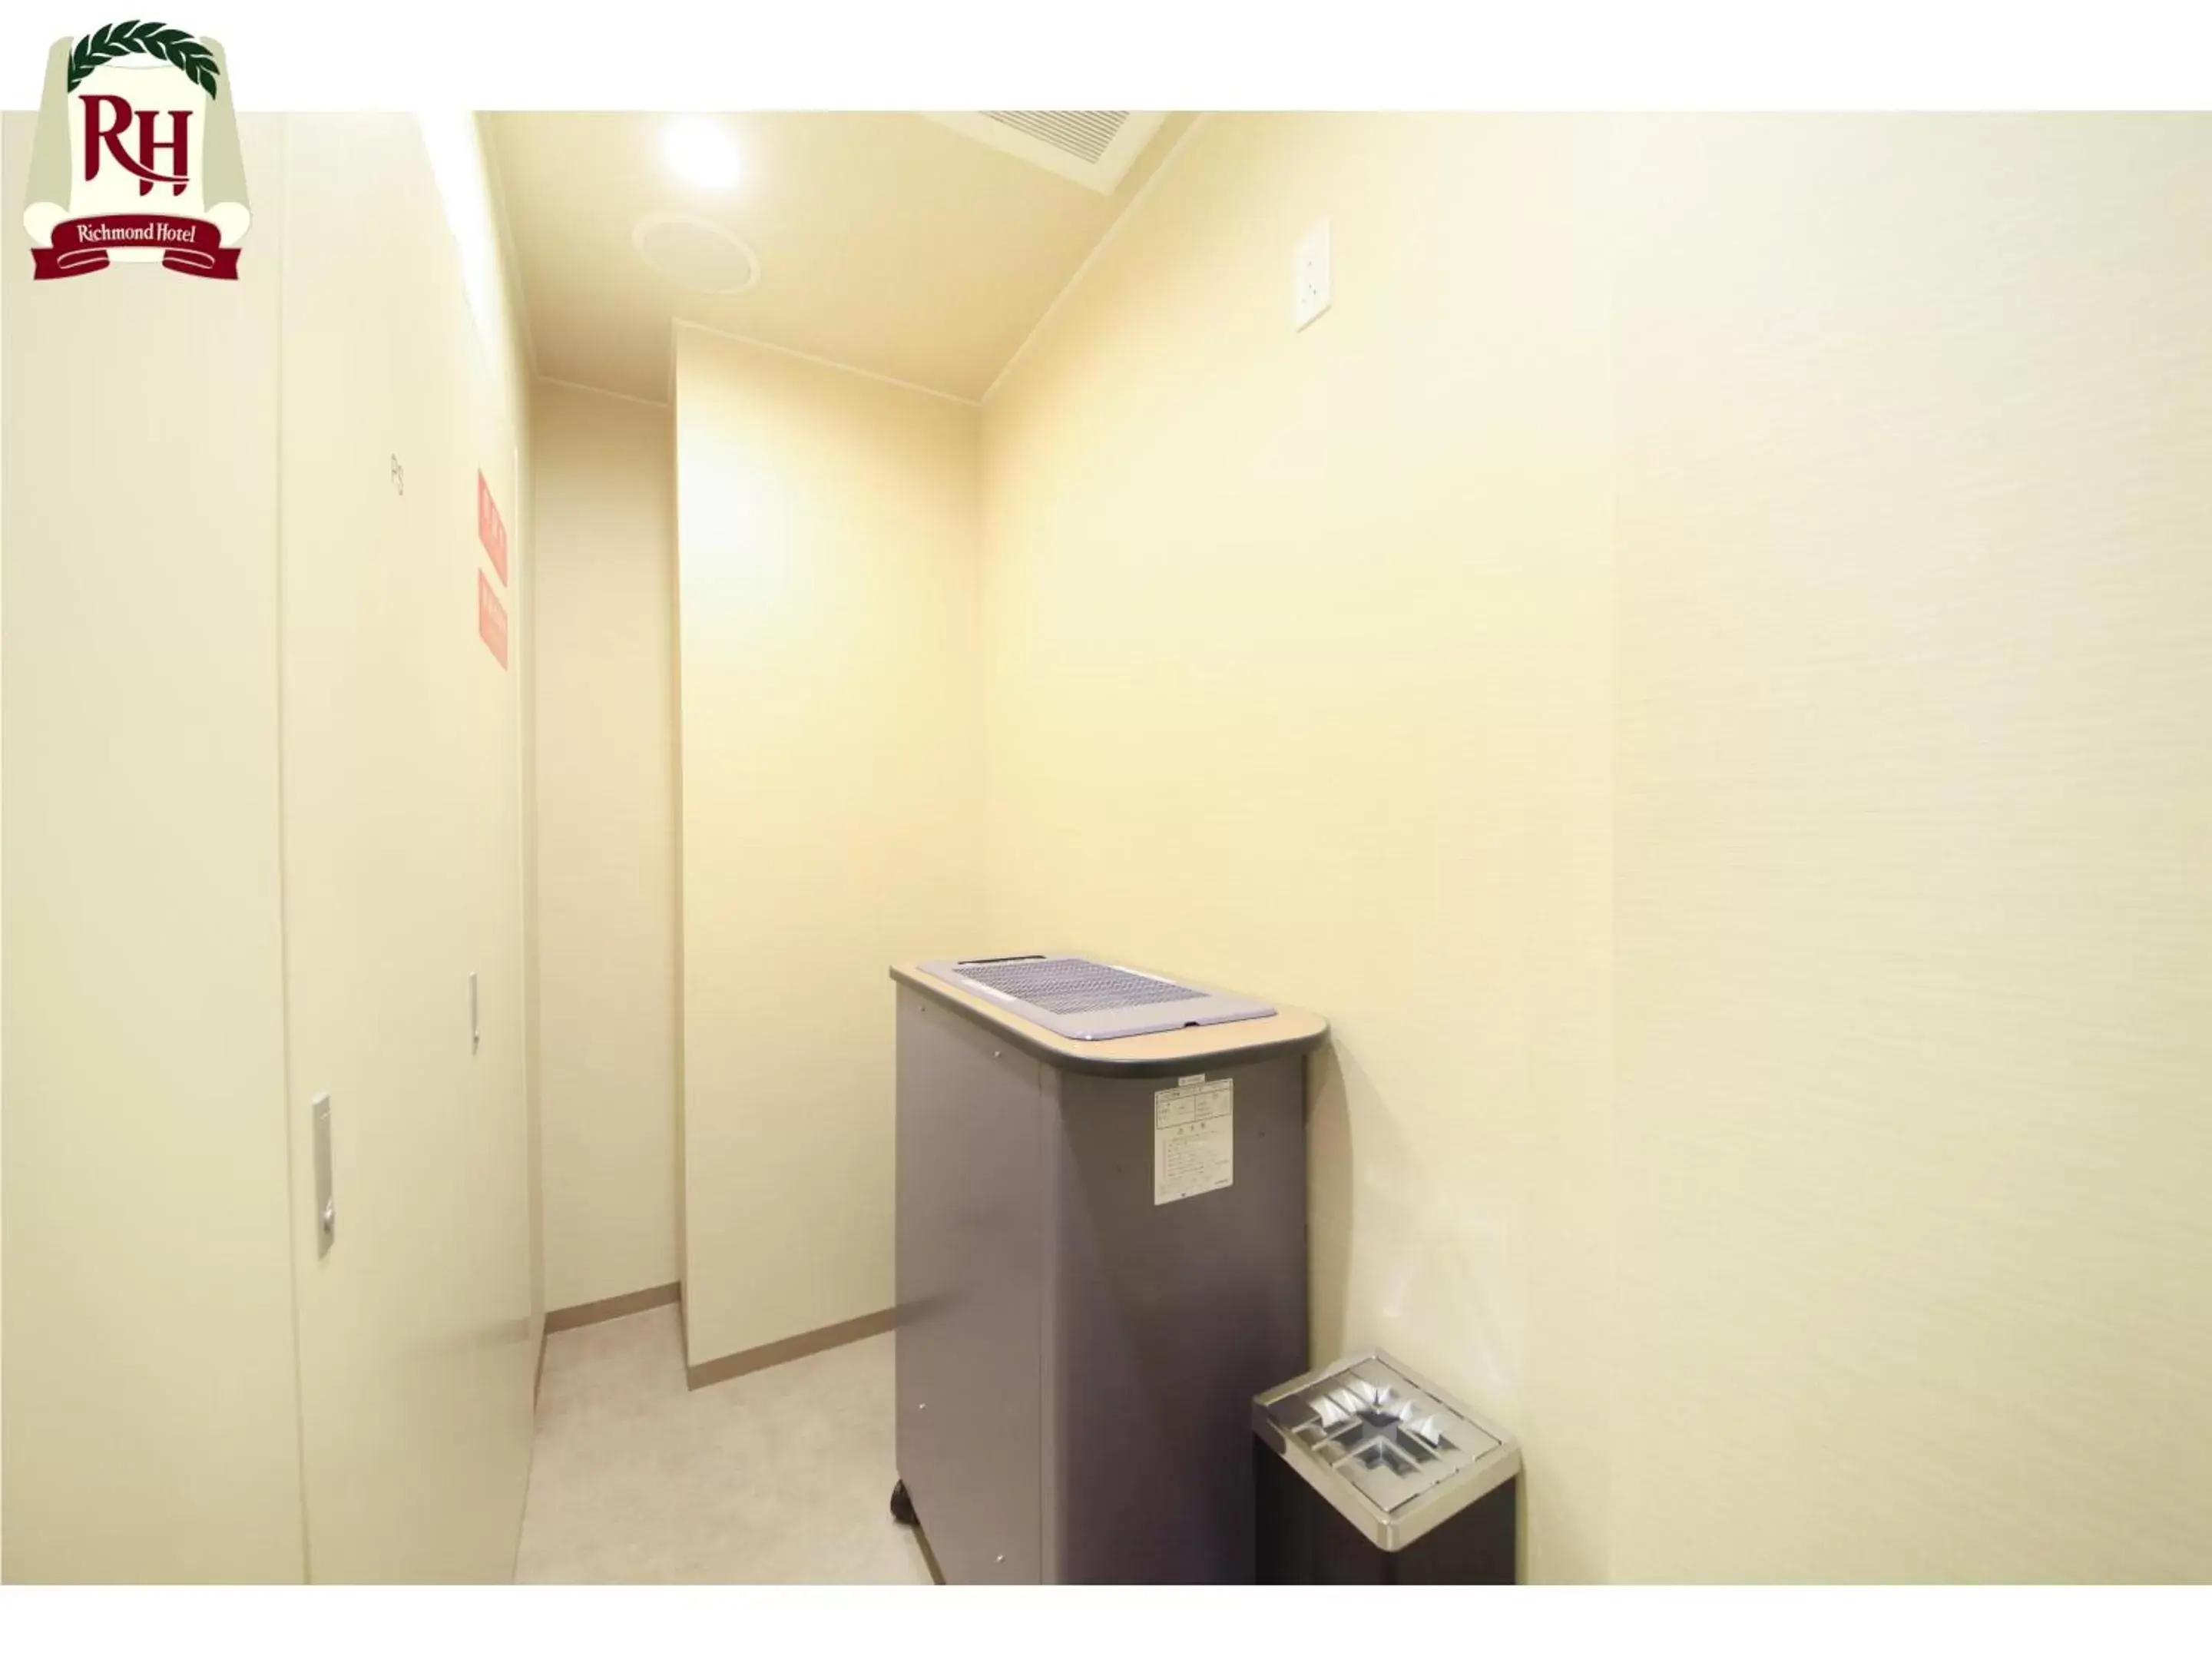 Area and facilities in Richmond Hotel Namba Daikokucho